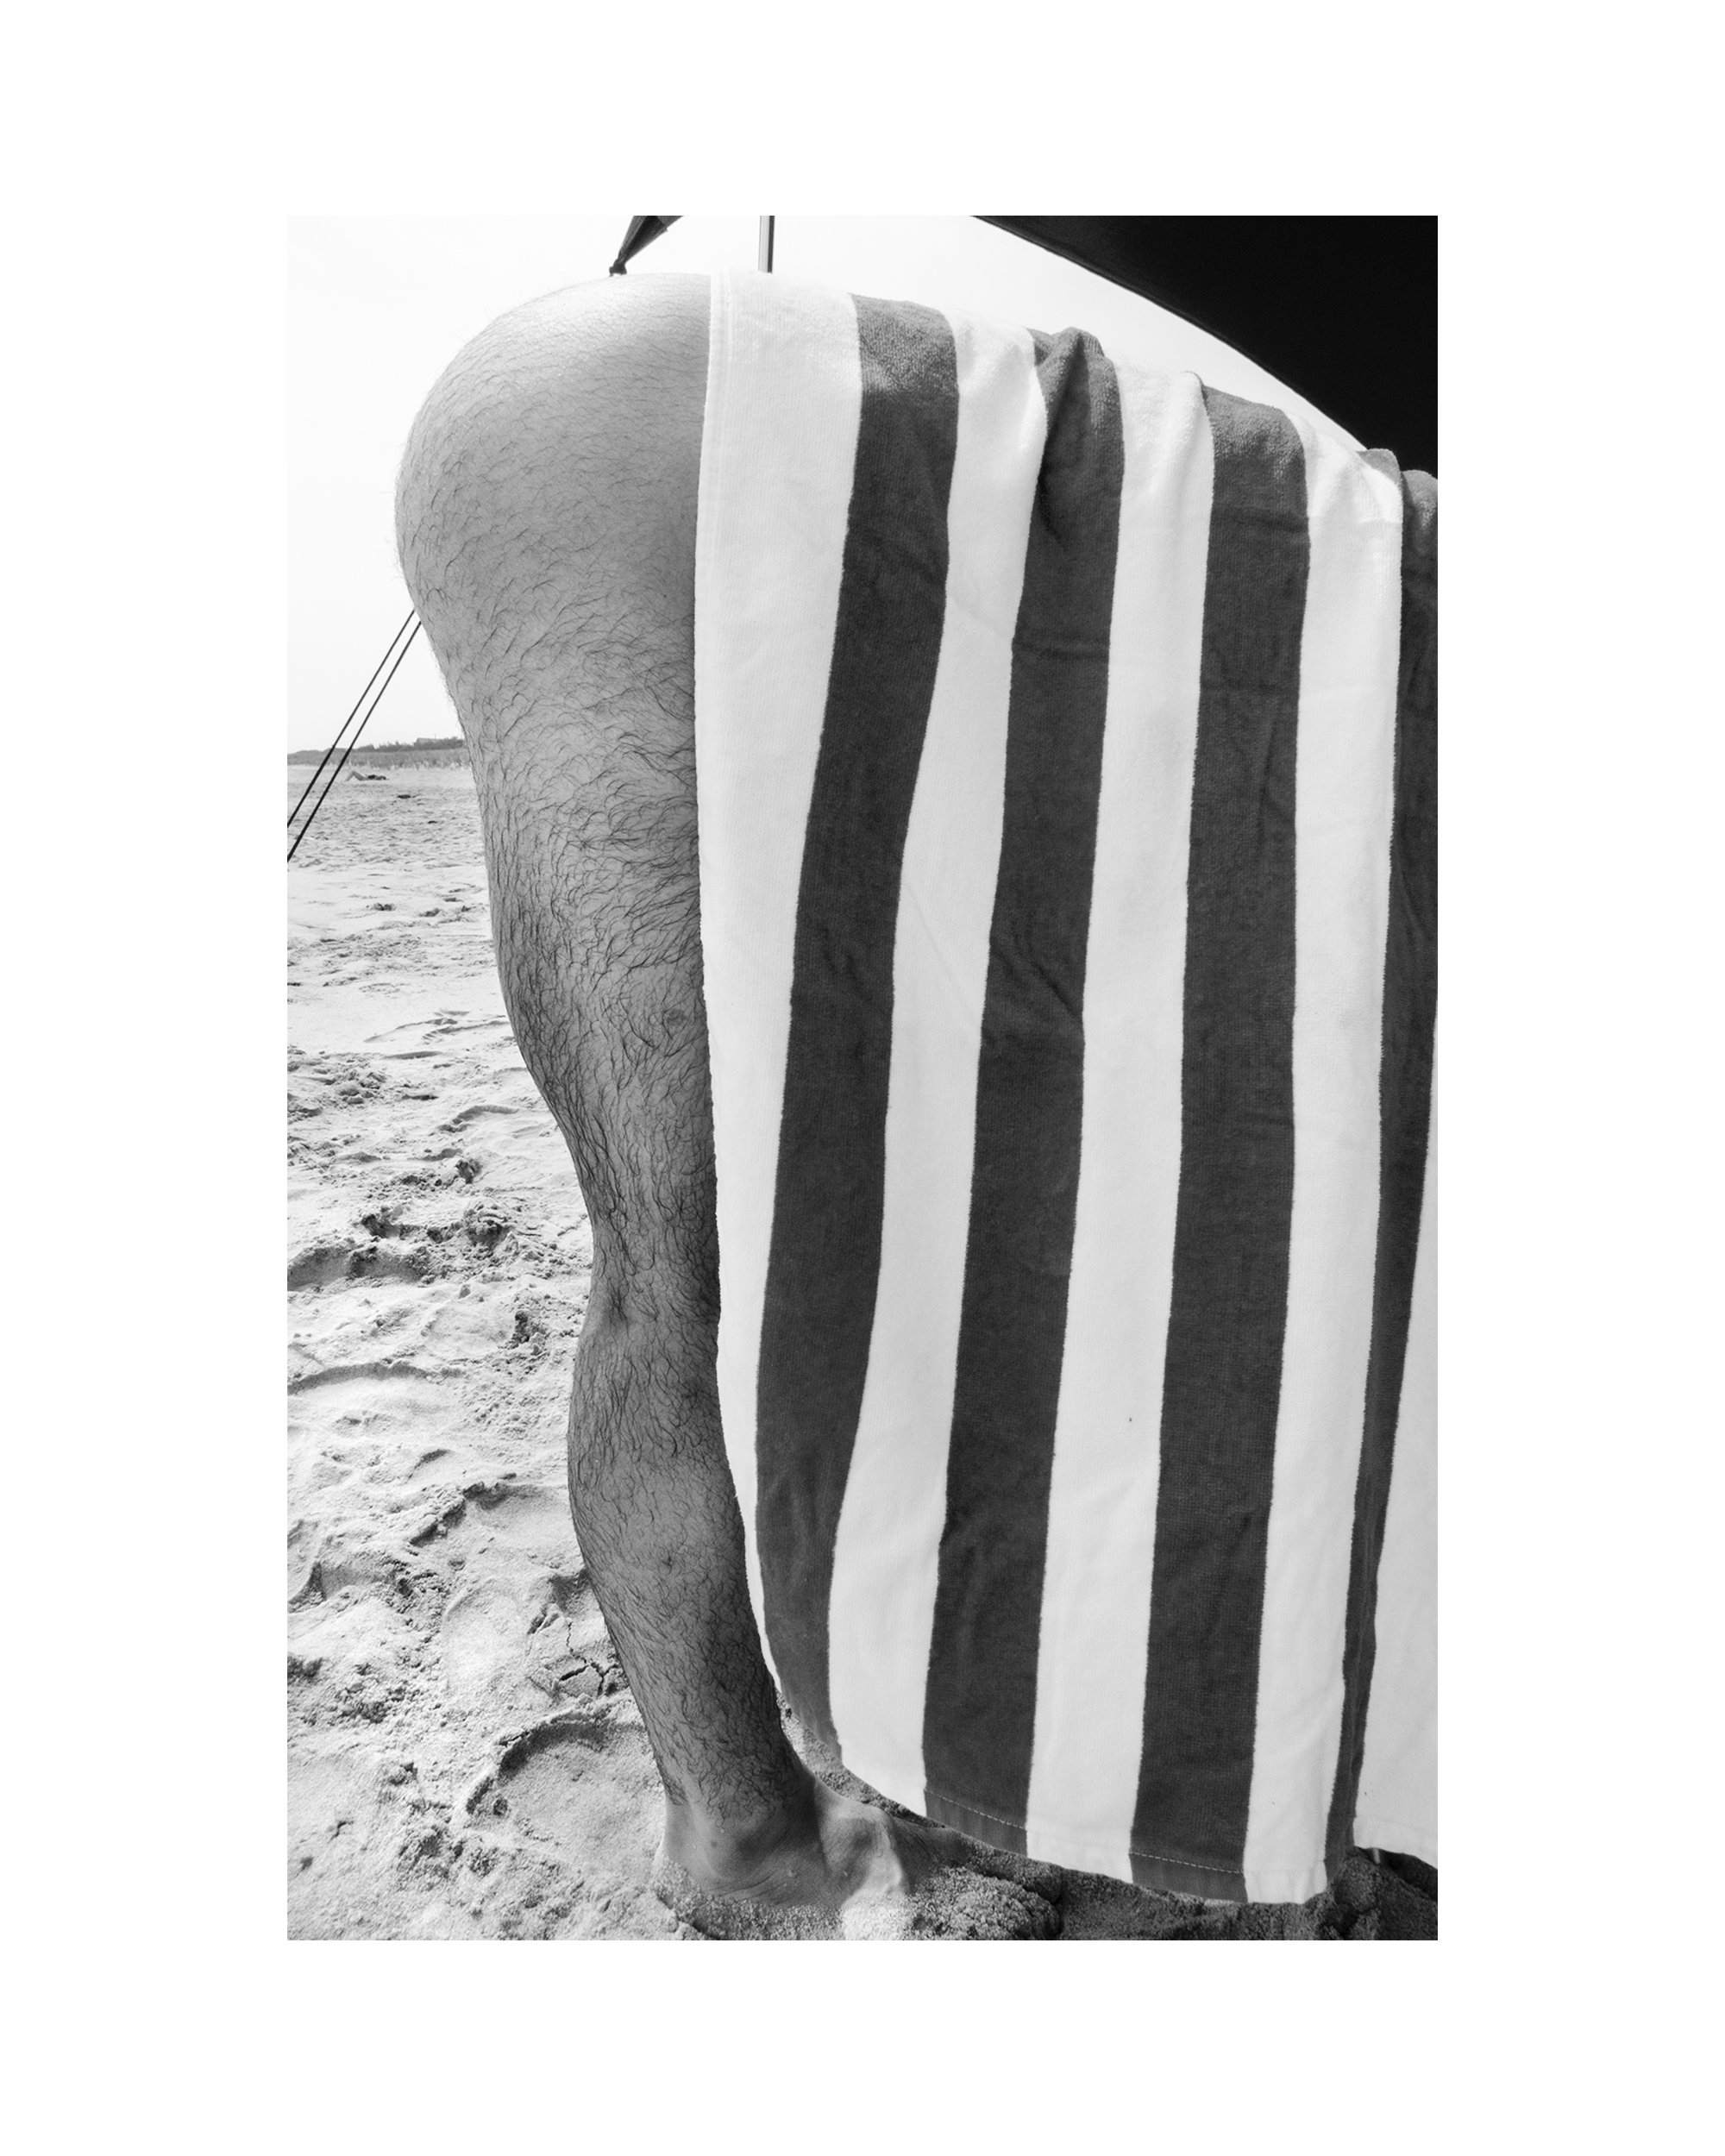   Matthew/Striped Towel, Cherry Grove, 06.13.22  